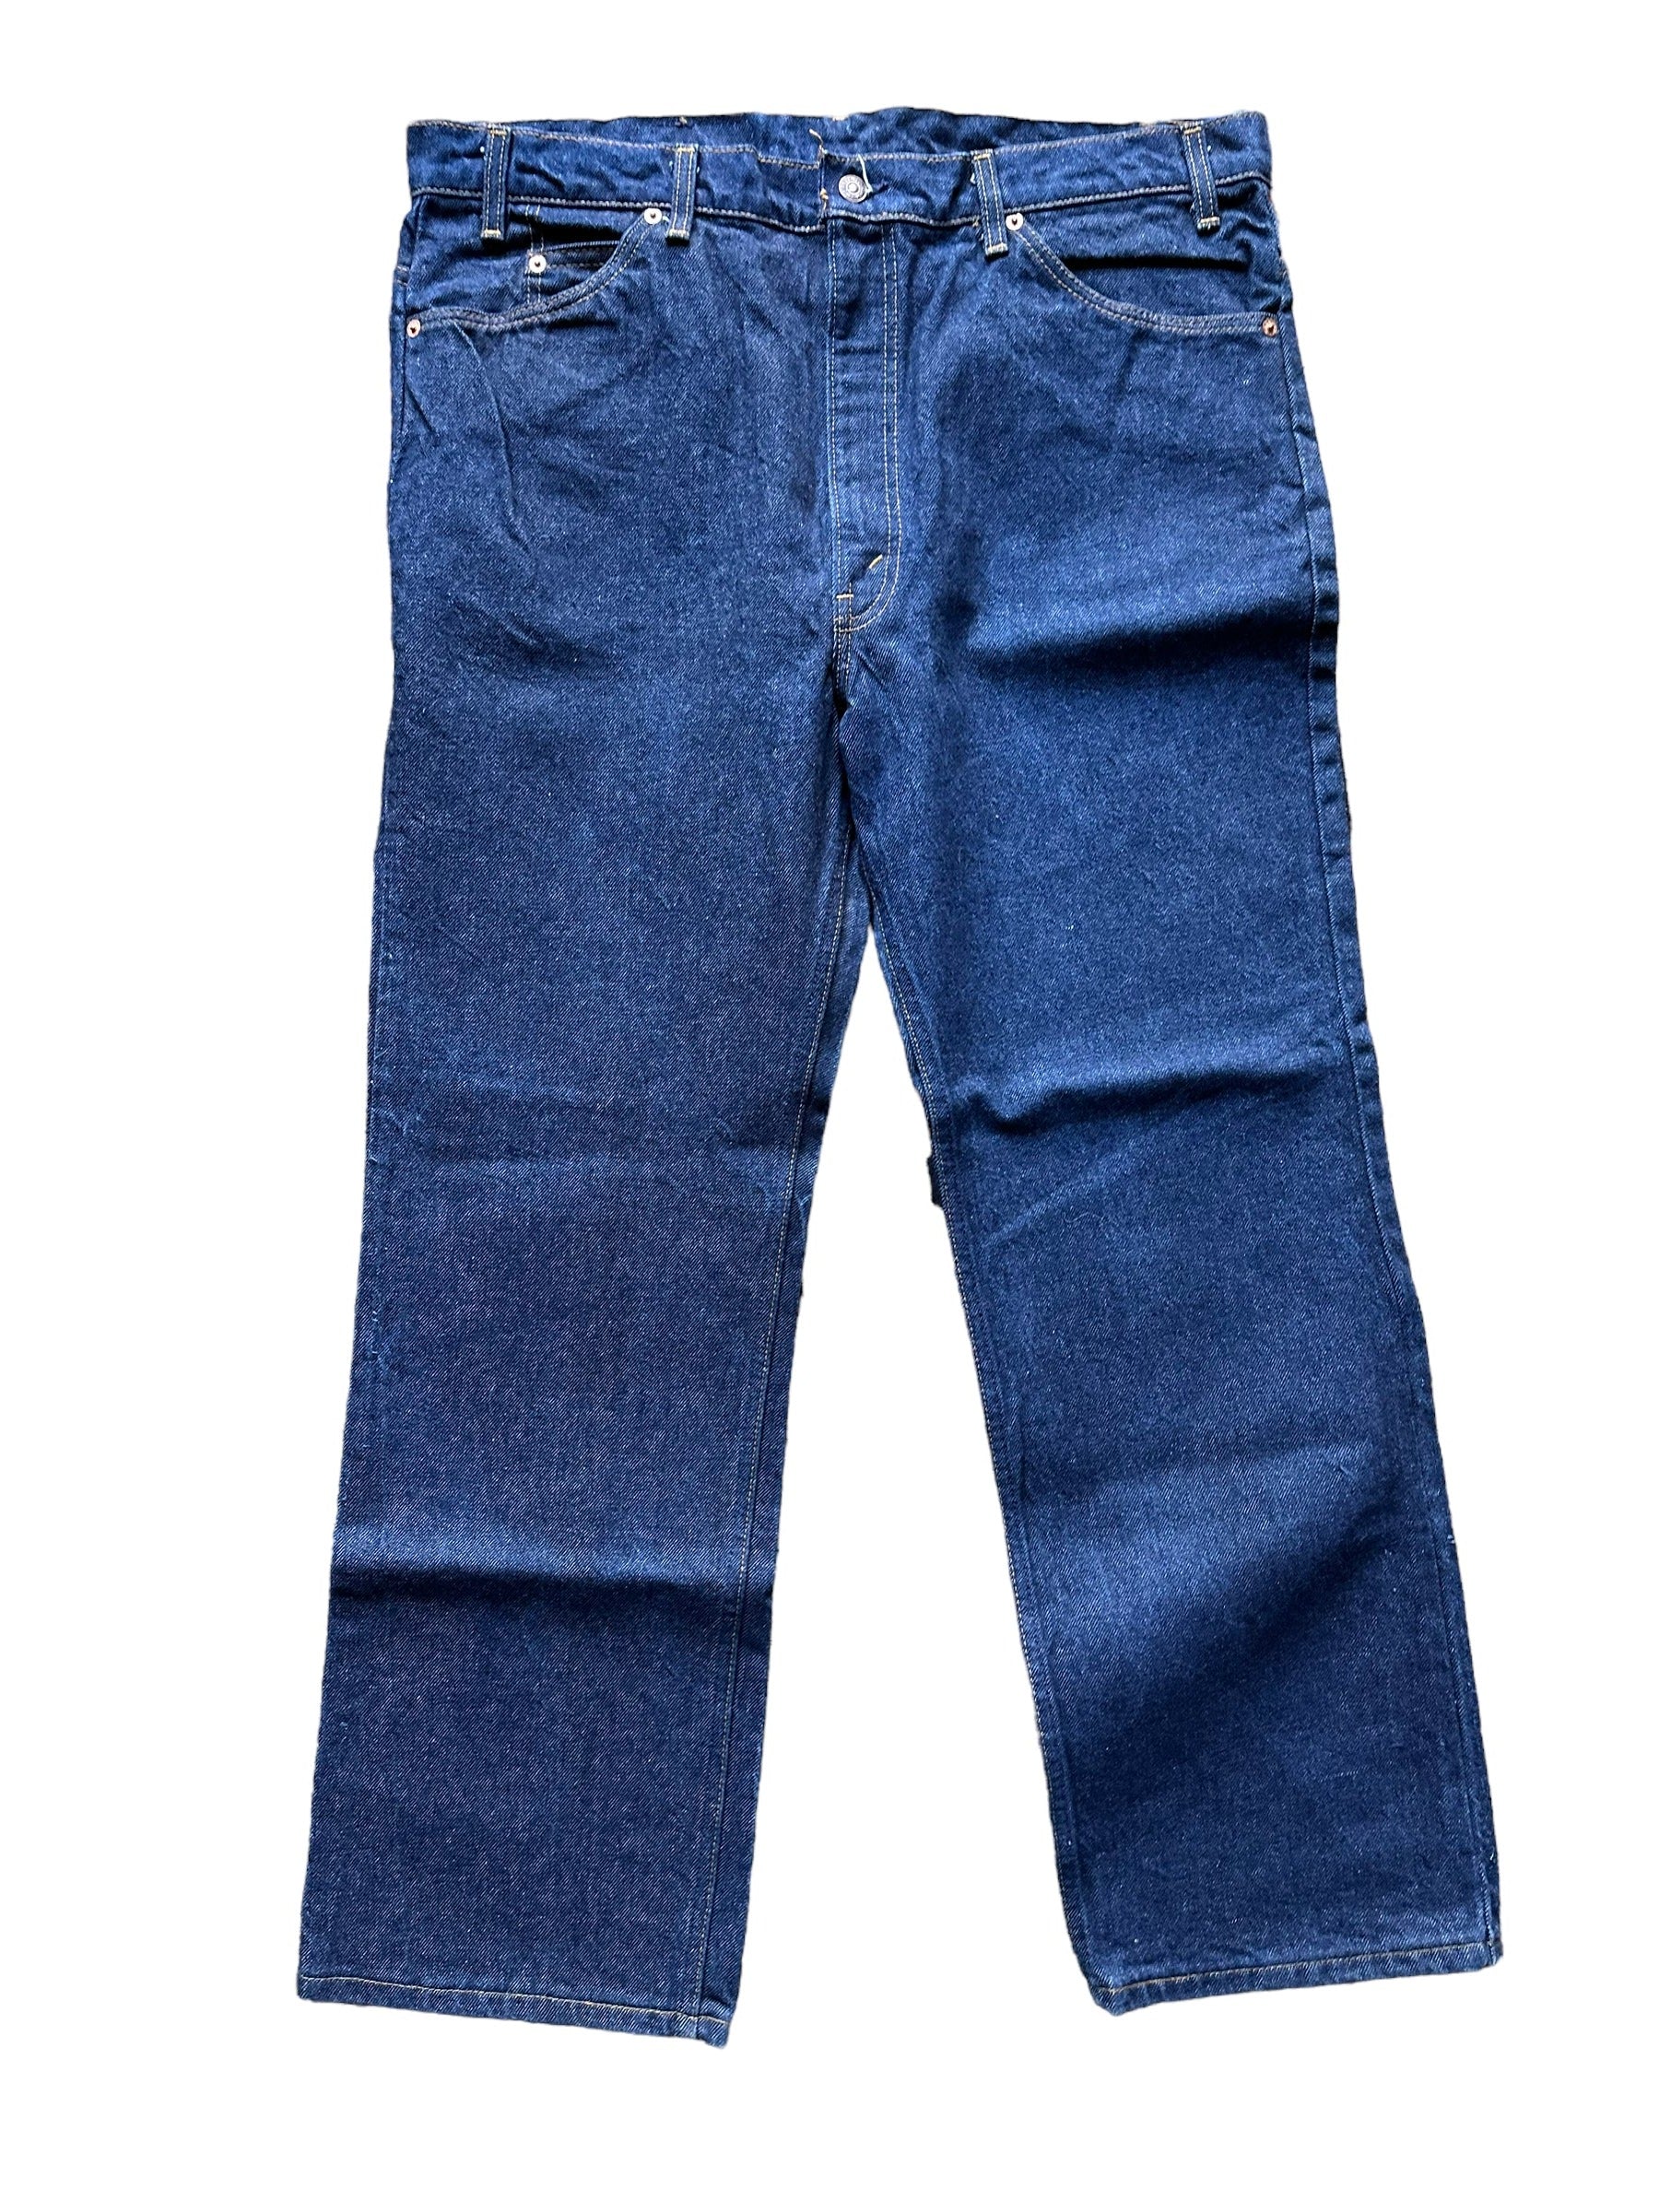 Vintage Orange Tab Levi's 517 Jeans 40x30 | Seattle Vintage Denim | Barn  Owl Deadstock Jeans